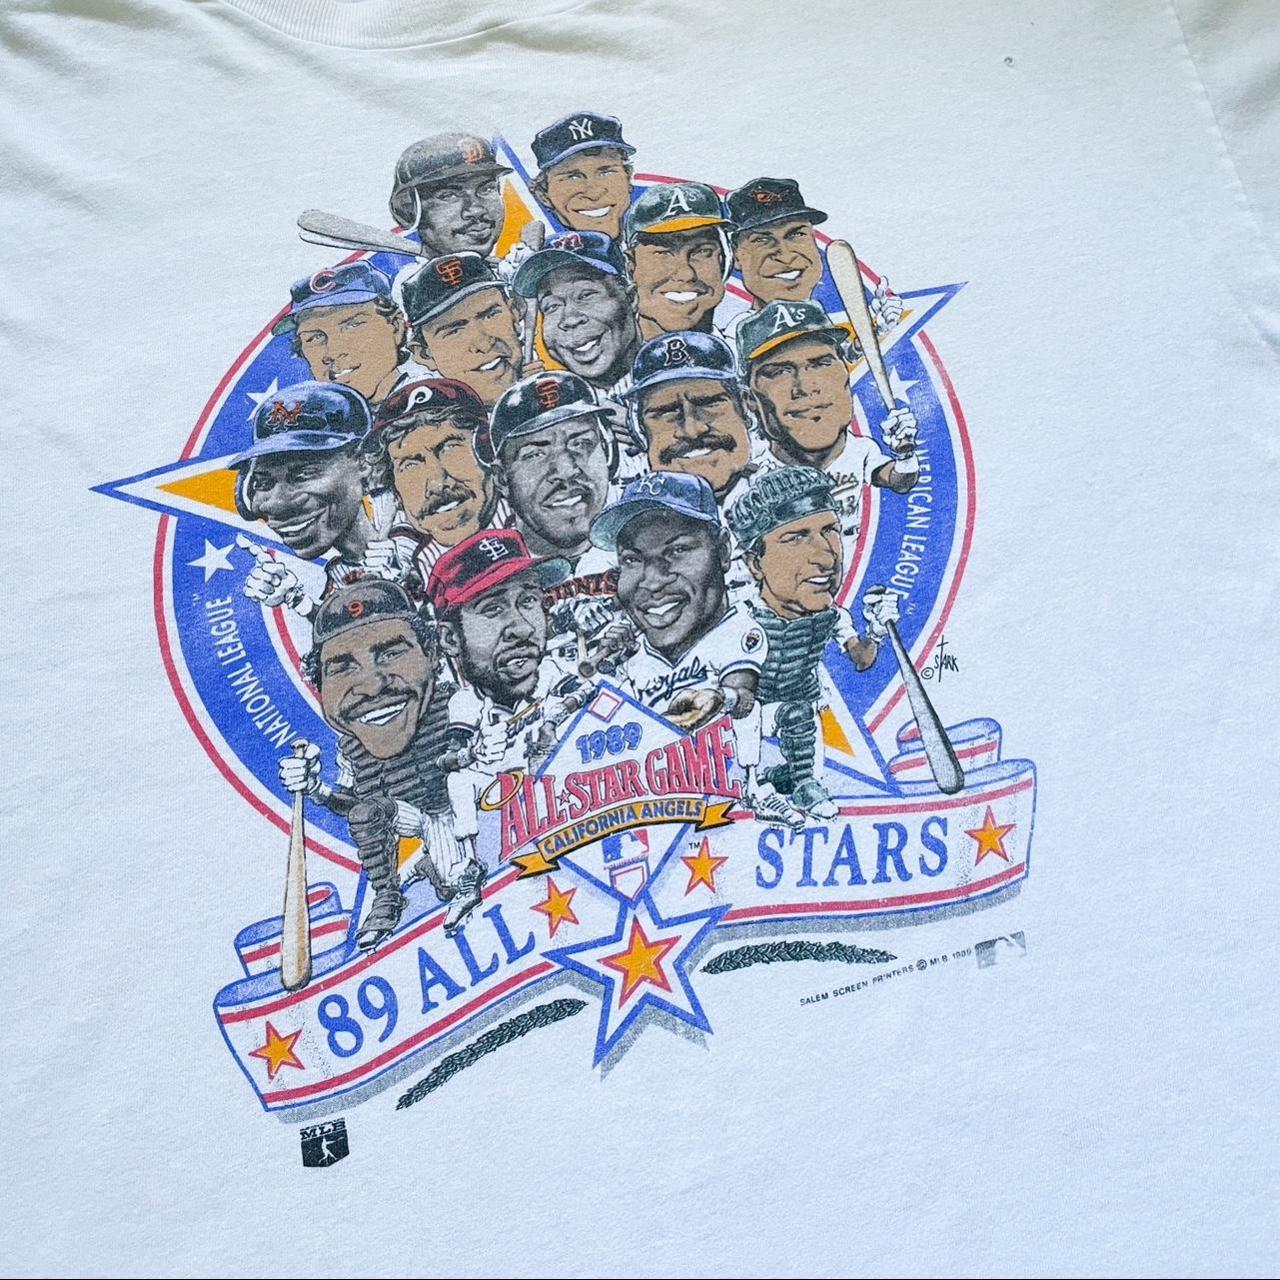 New 1989 Mlb All Star Game Shirt California Angels Shirt80s 